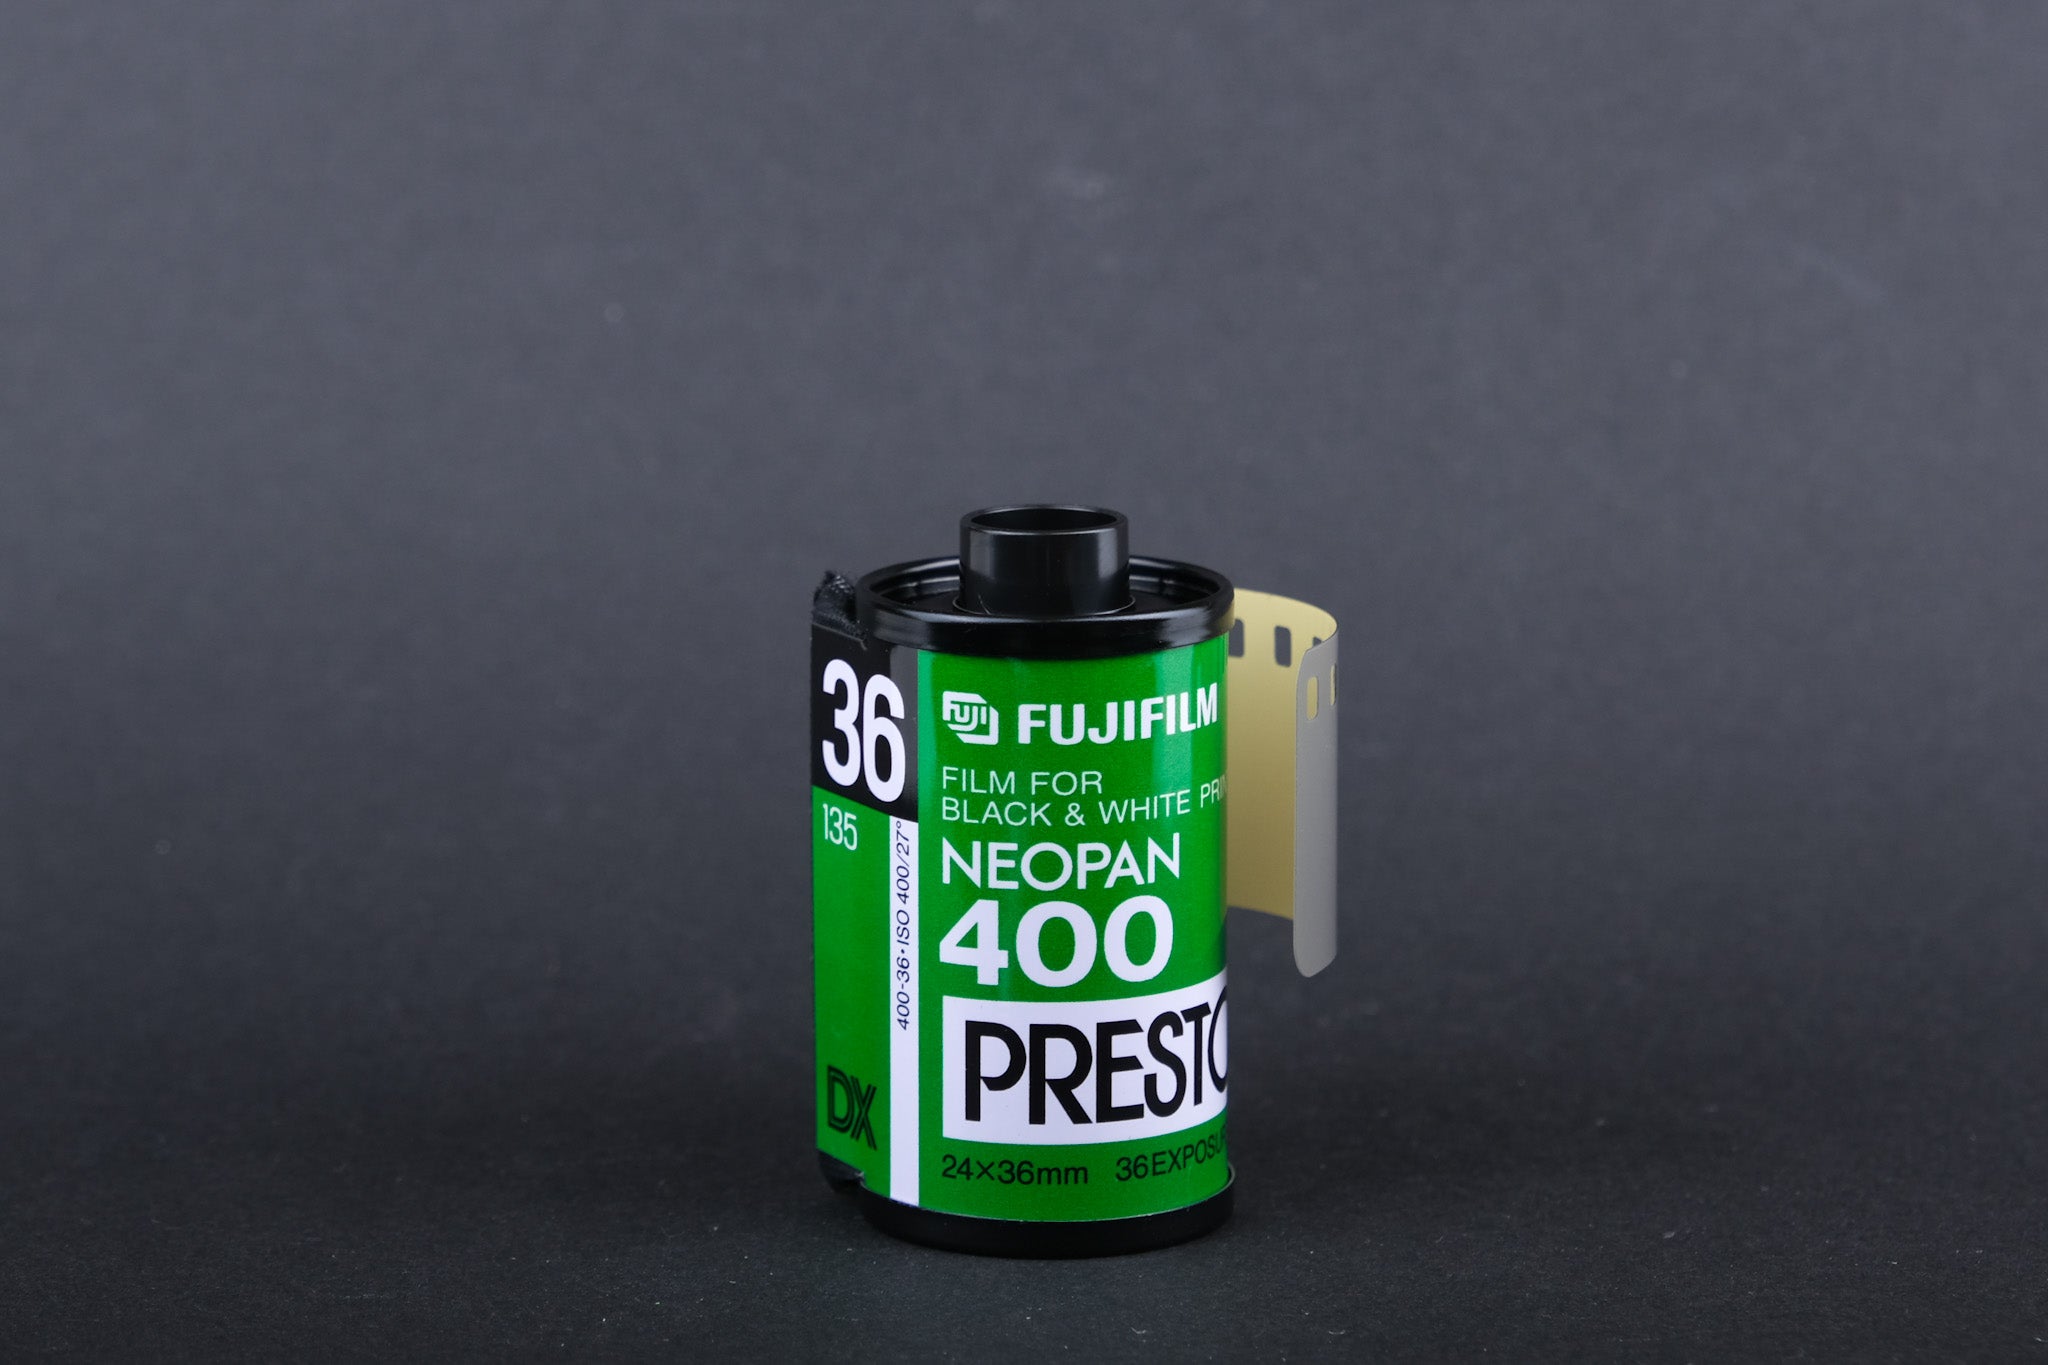 Fujifilm Neopan 400 Presto 35mm Expired Black and White Film 36 exp